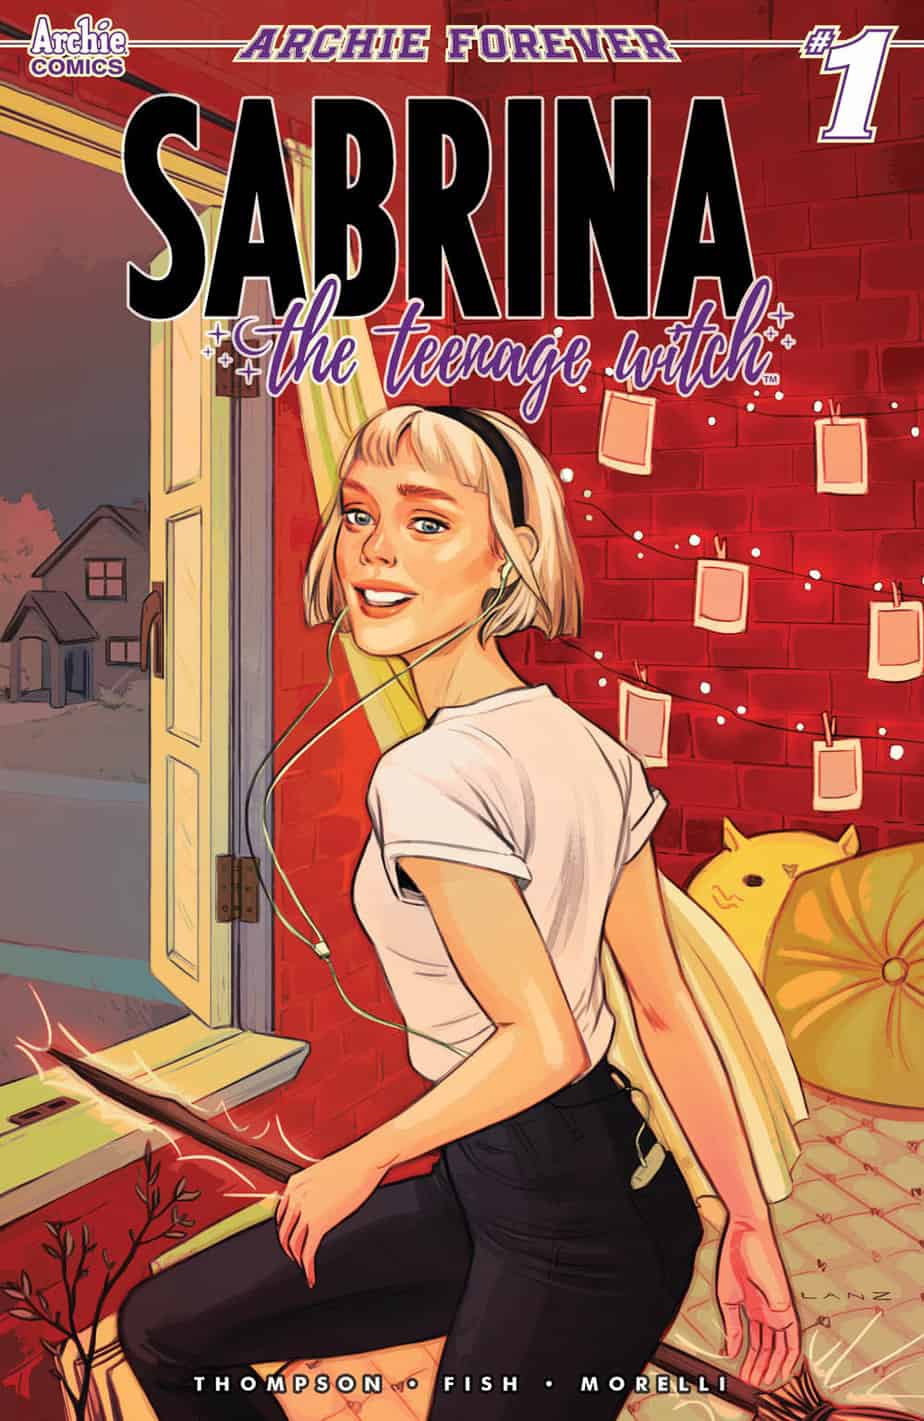 SABRINA THE TEENAGE WITCH #1 - Cover E